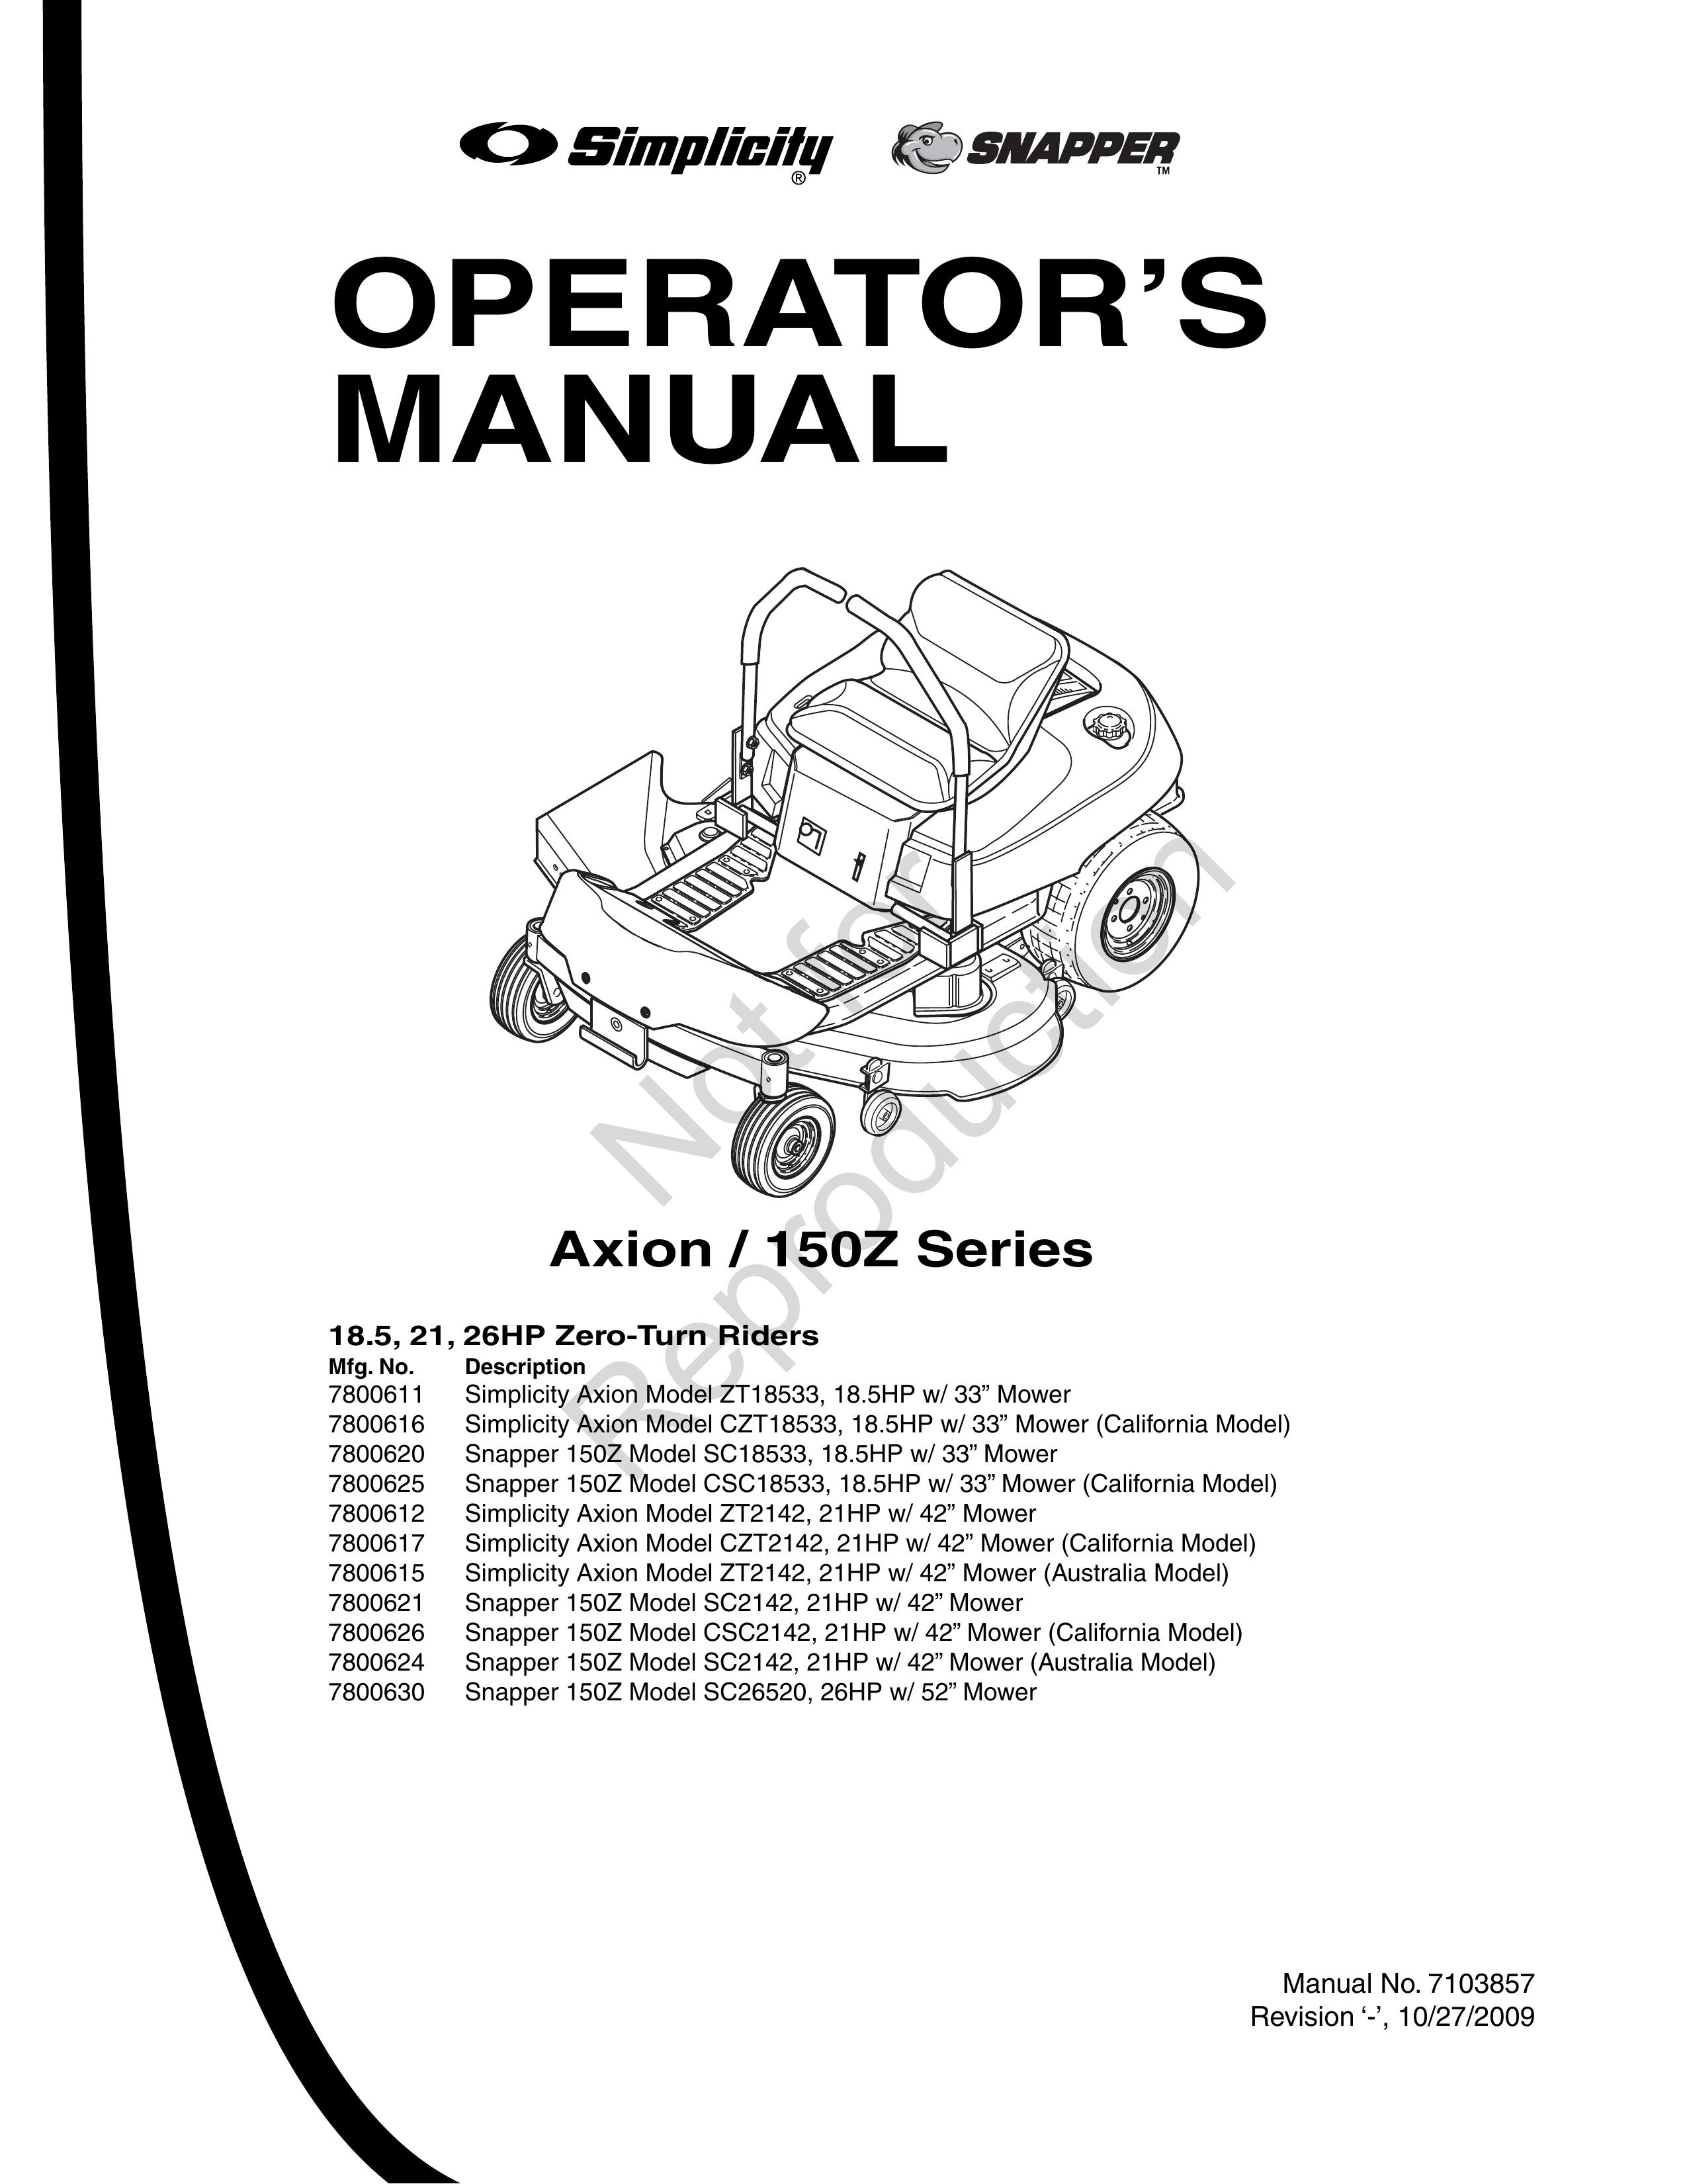 Axion CZT2142 Lawn Mower User Manual